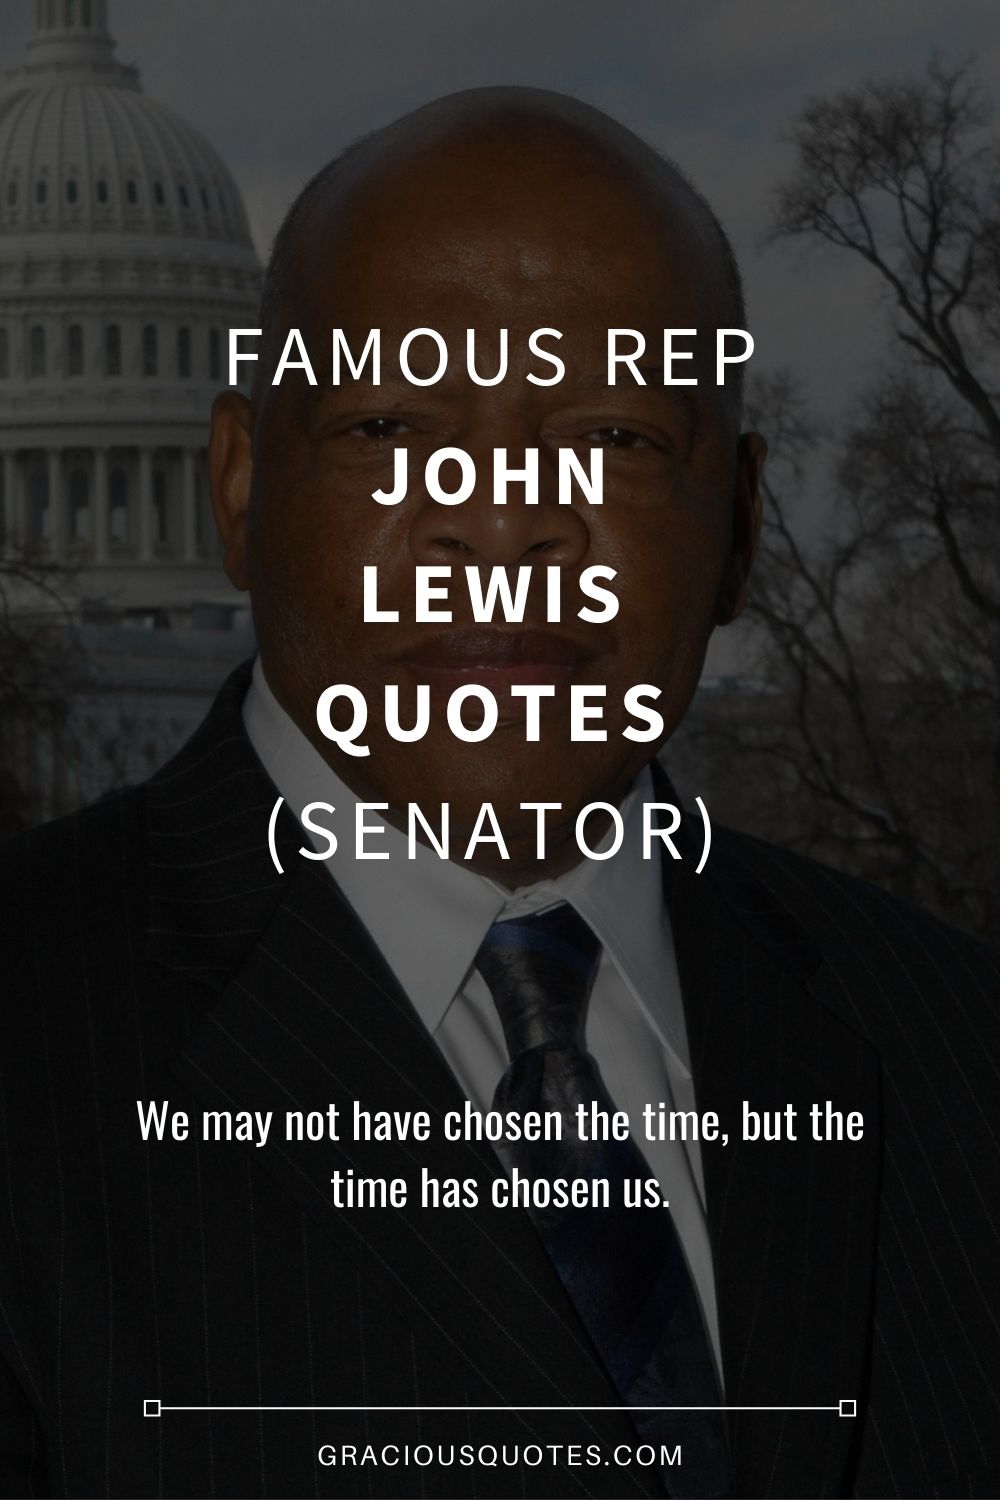 Famous Rep John Lewis Quotes (SENATOR) - Gracious Quotes